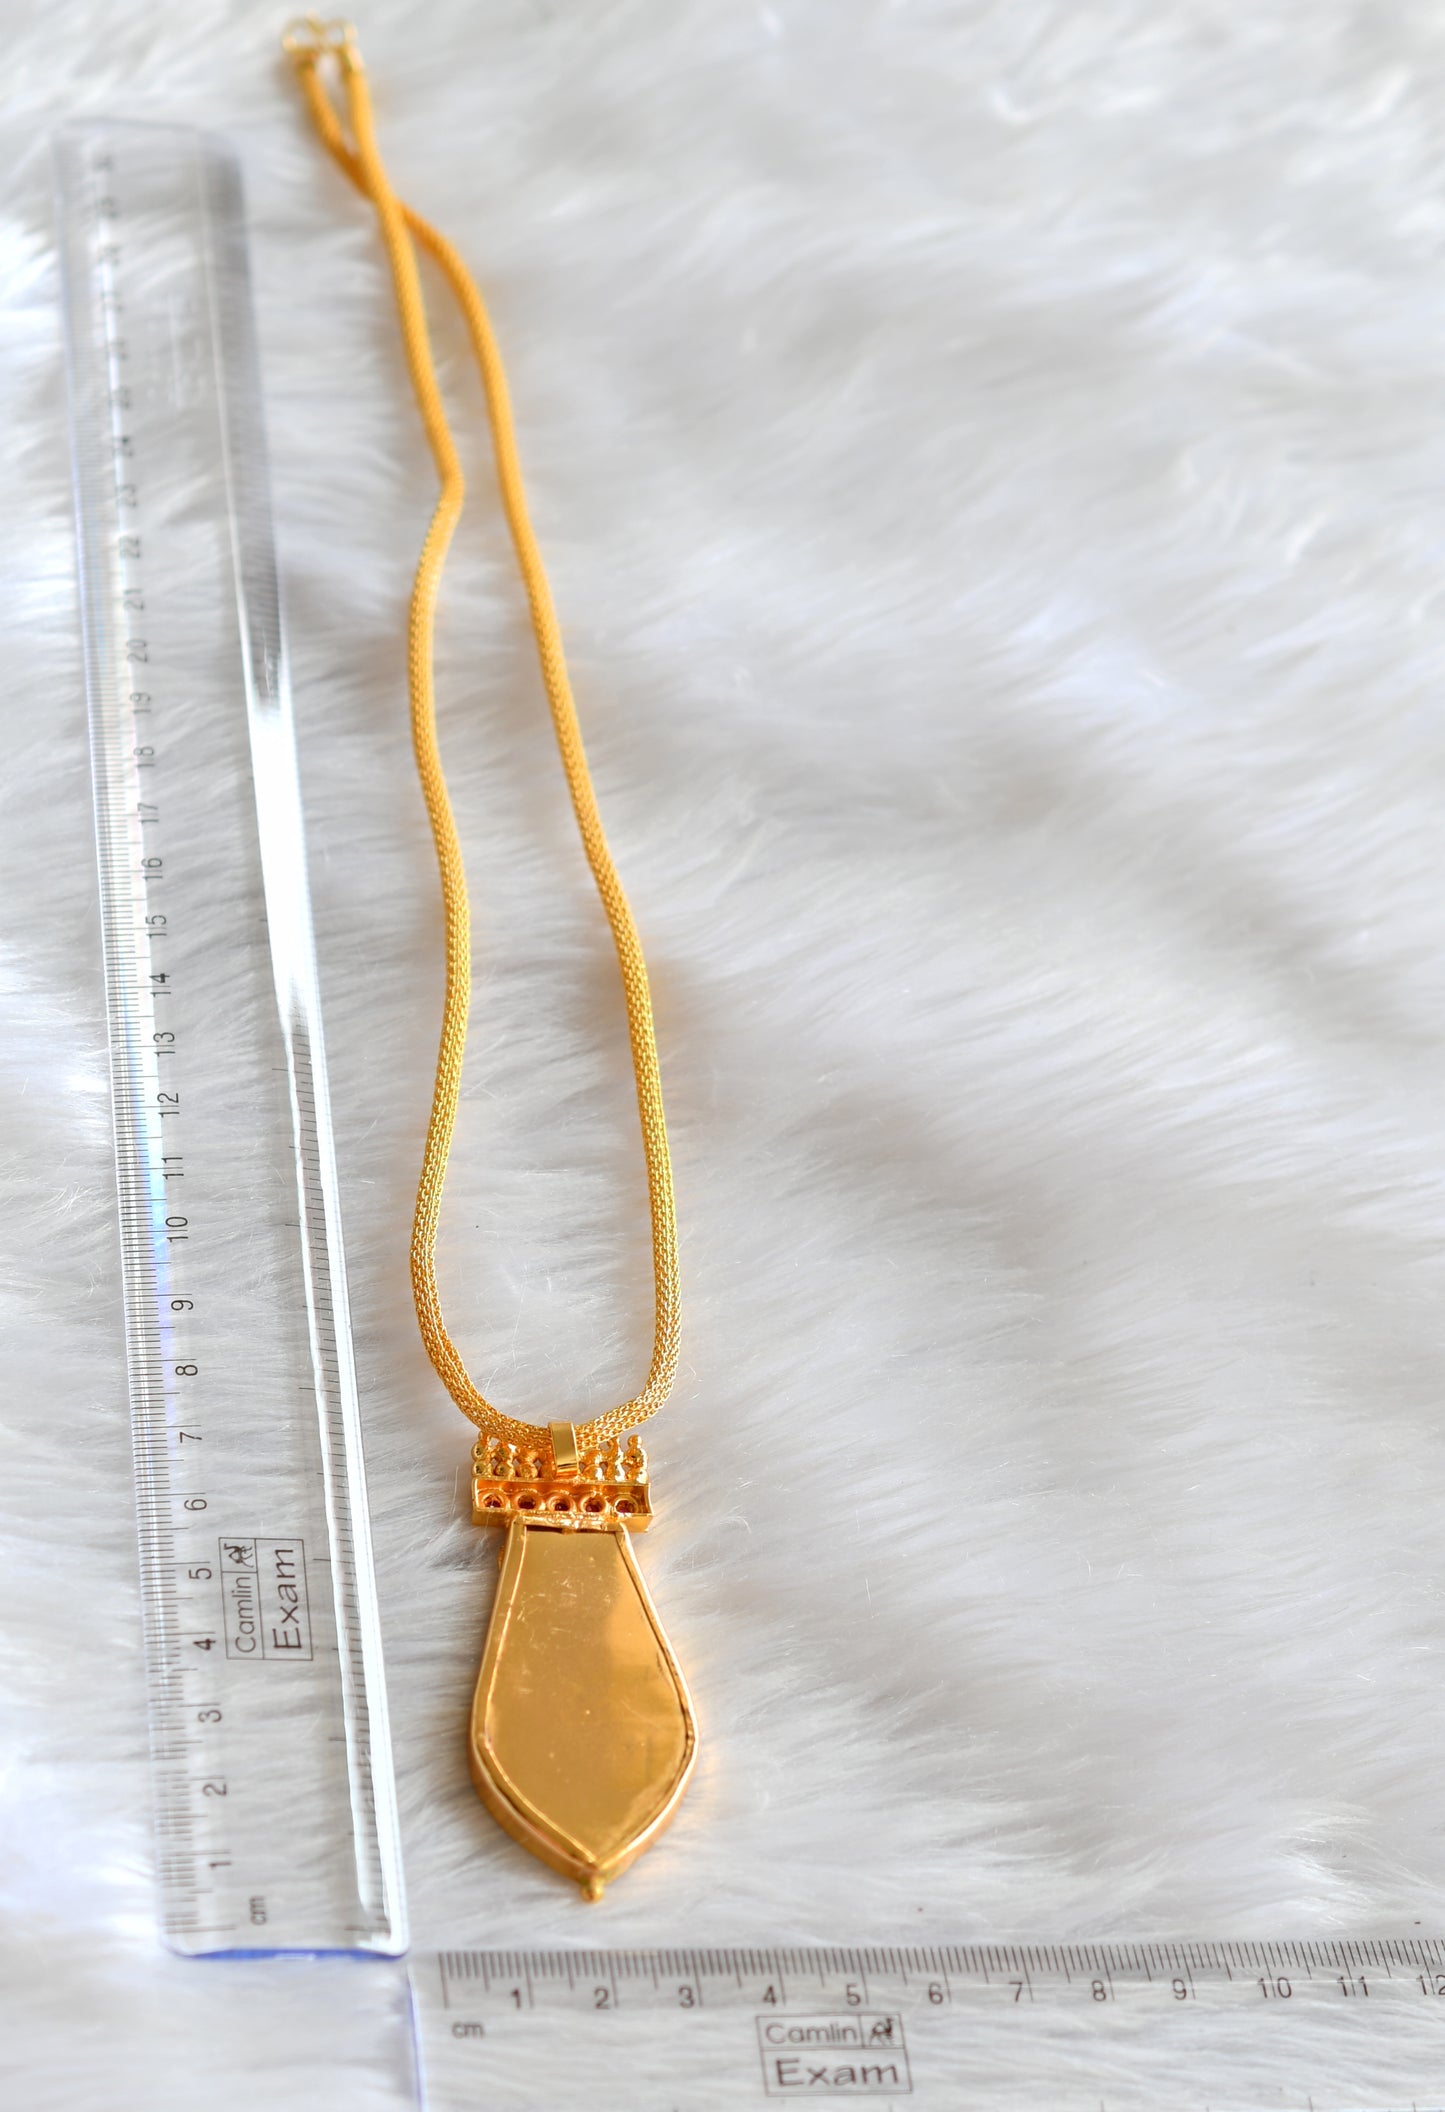 Gold tone kerala style 24 inches chain pink-green nagapadam pendant dj-43130